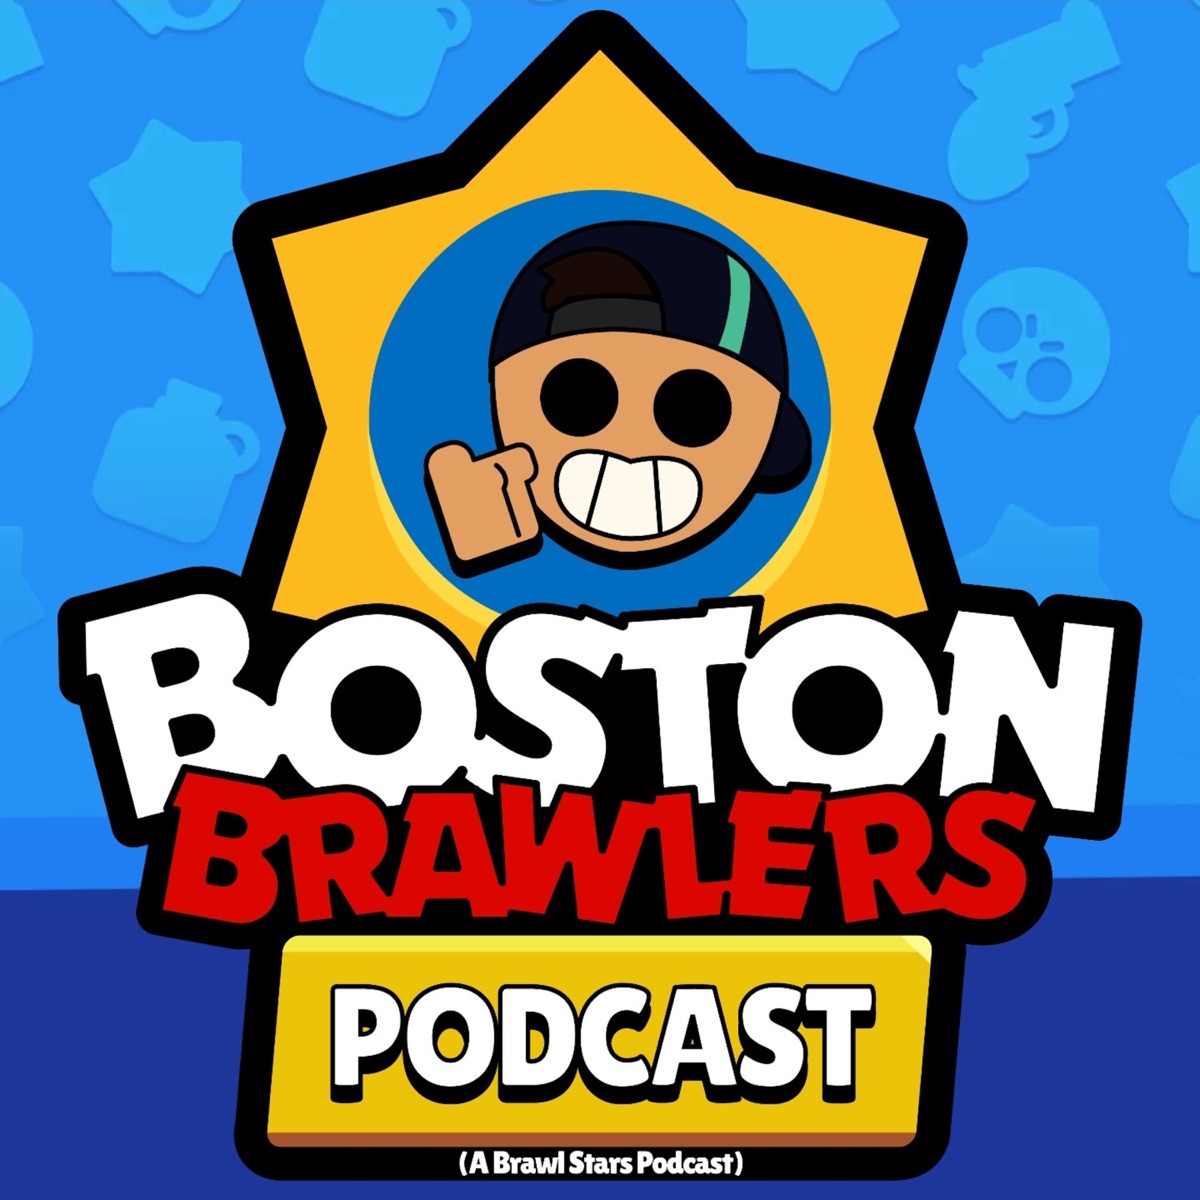 Boston Brawlers A Brawl Stars Podcast Podcast Podtail - when was brawl stars released in india